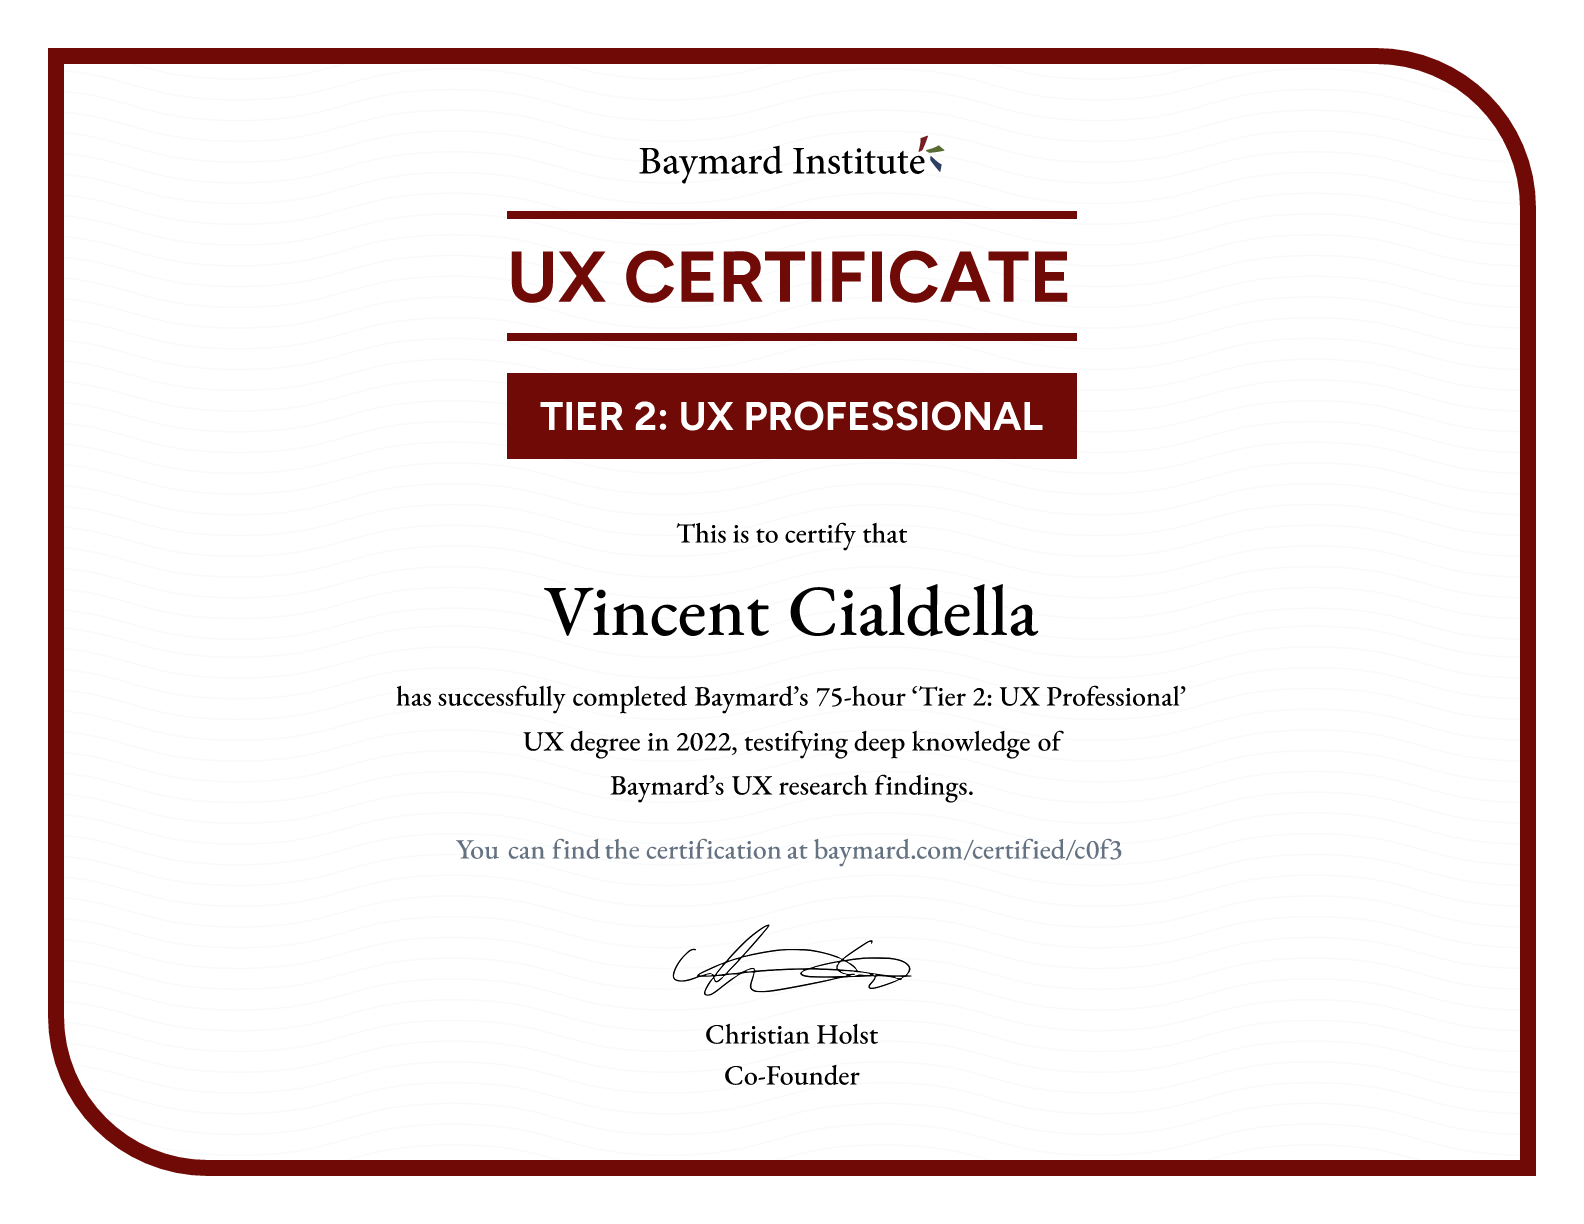 Vincent Cialdella’s certificate